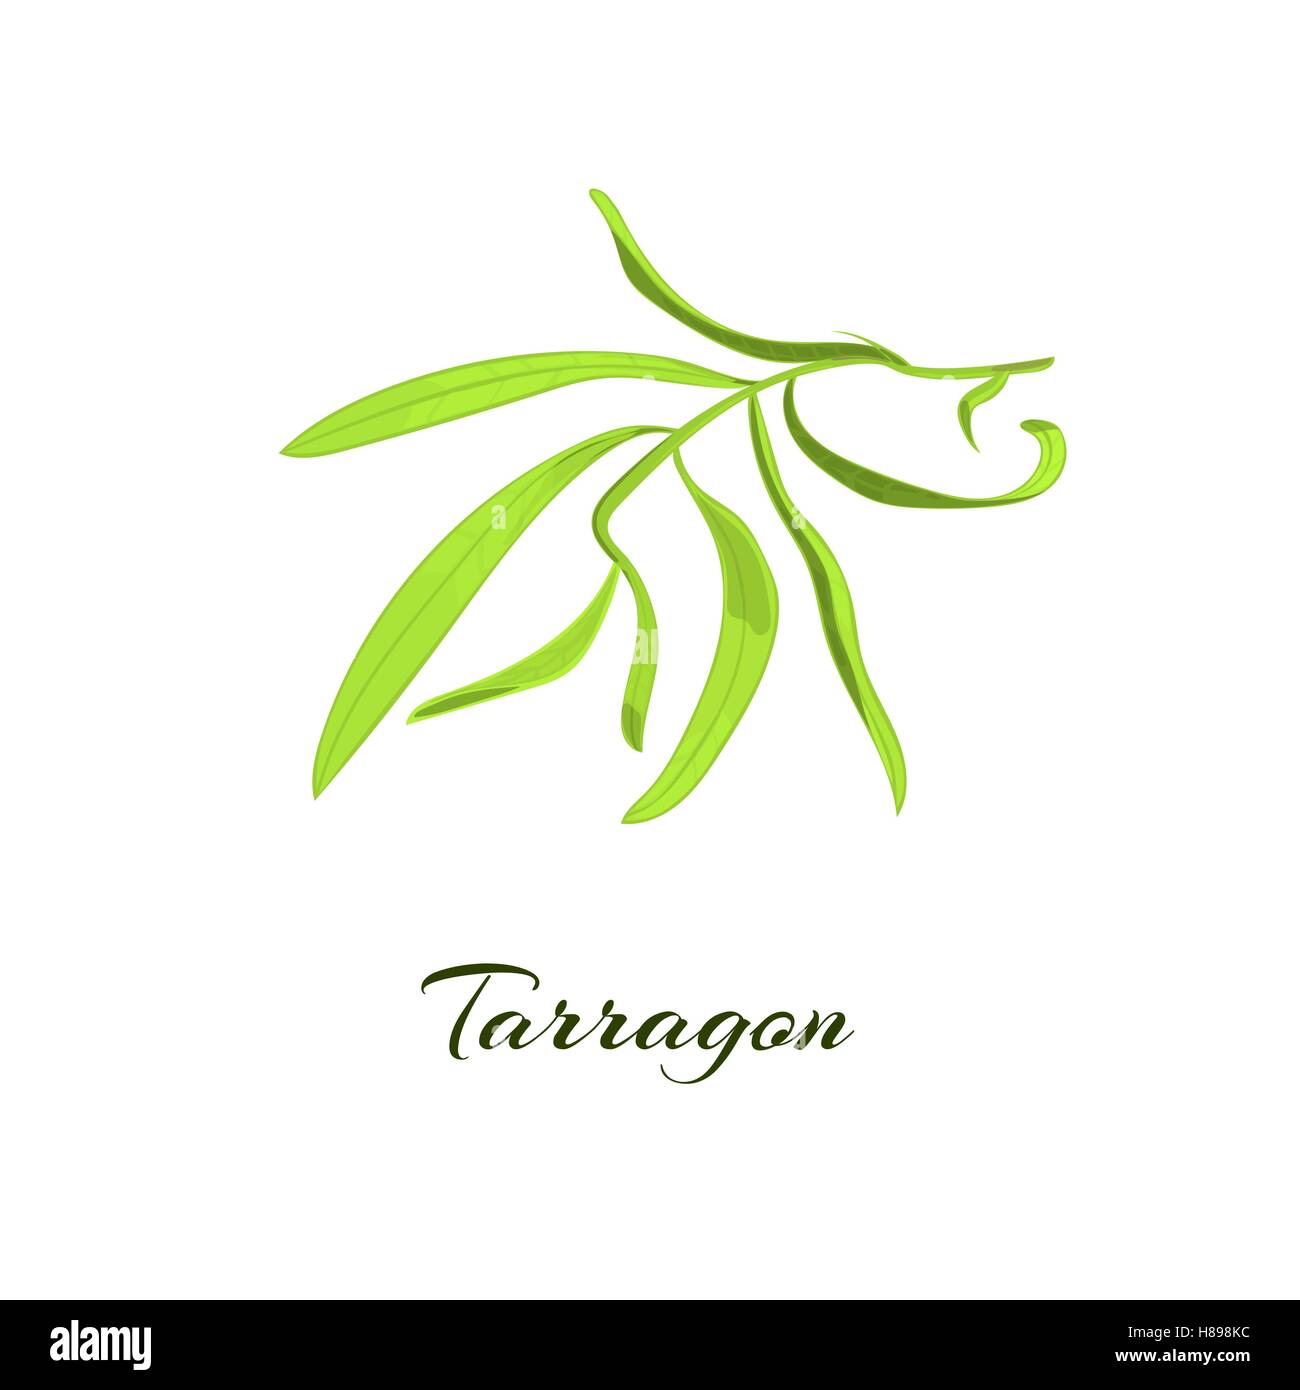 Dragoncello erba o Artemisia dracunculus. Illustrazione Vettoriale Illustrazione Vettoriale